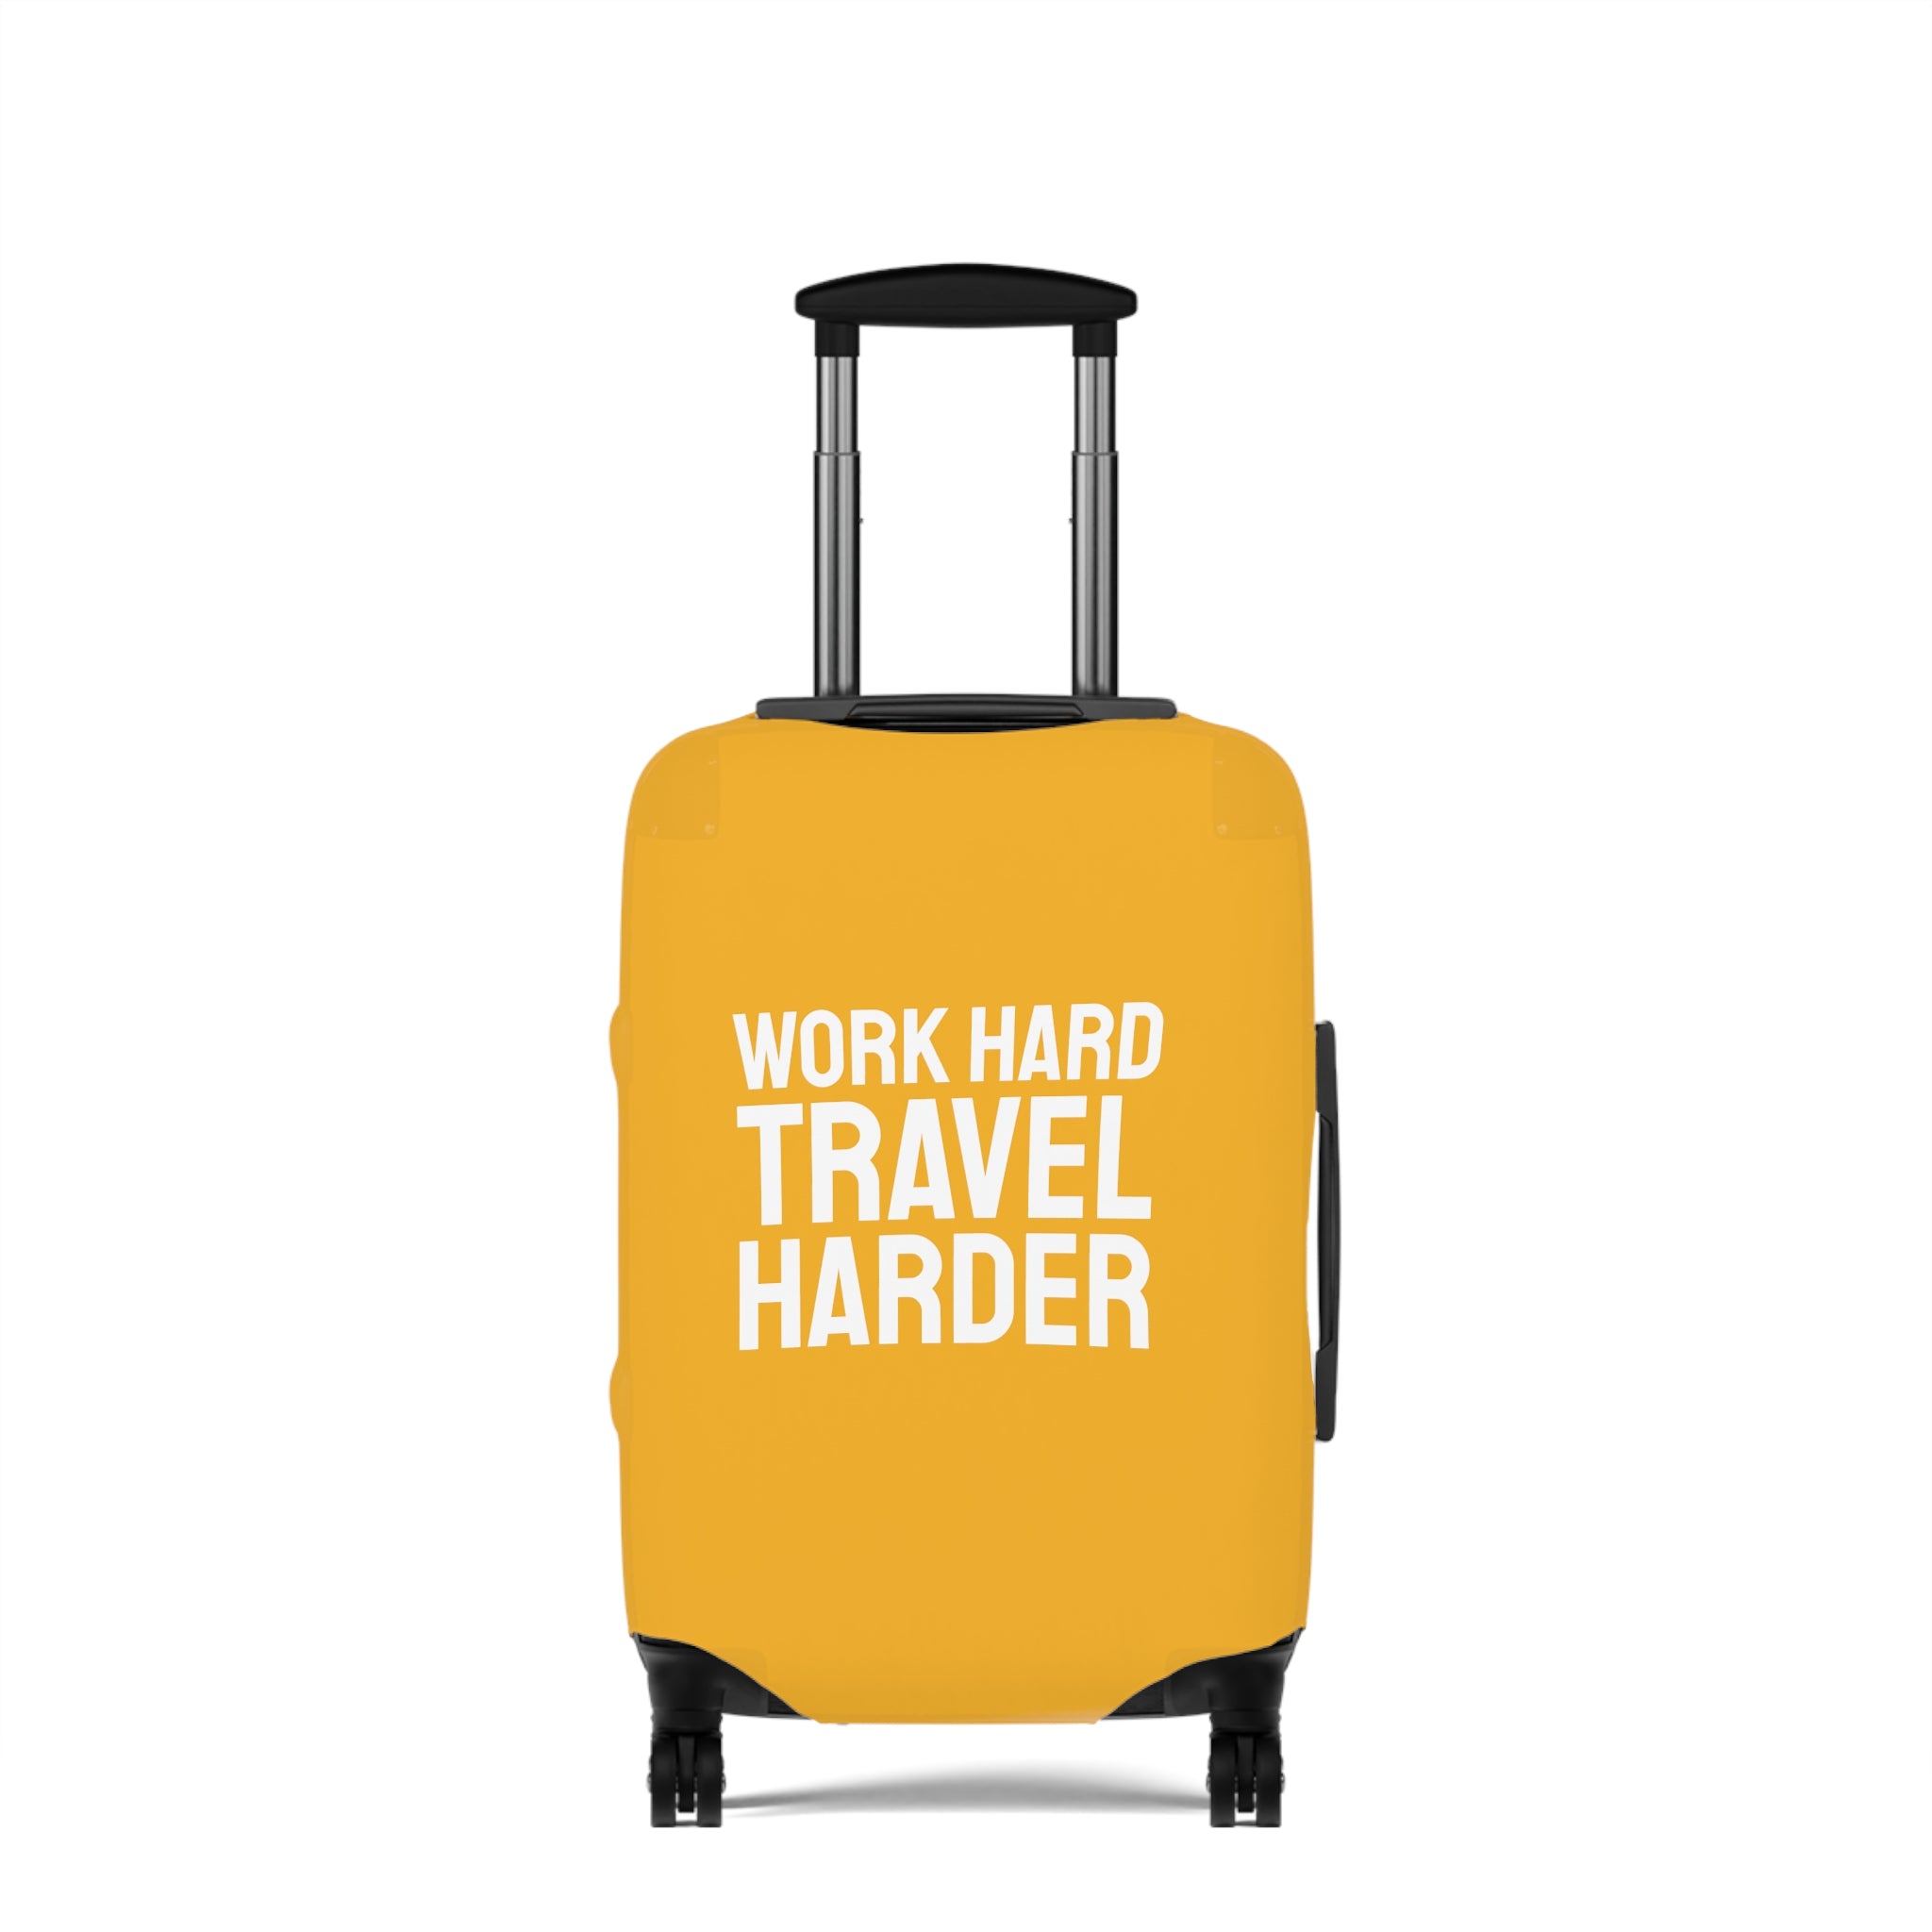 Work hard travel harder Luggage Cover (Yellow)